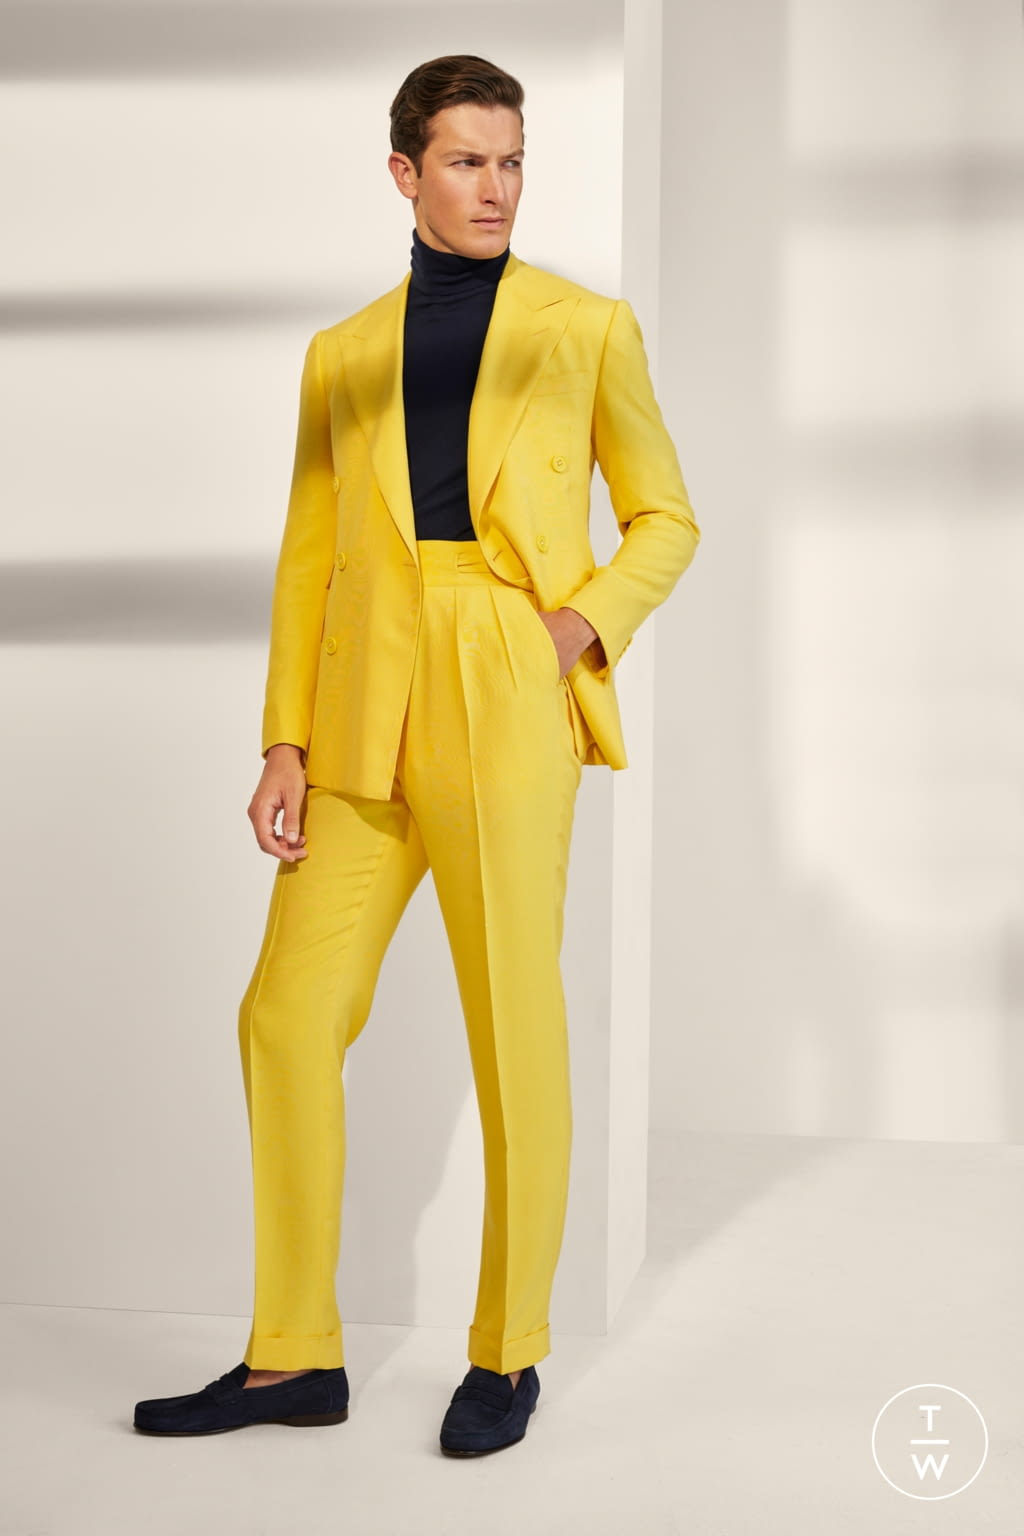 Ralph Lauren Spring 2020 Menswear Collection